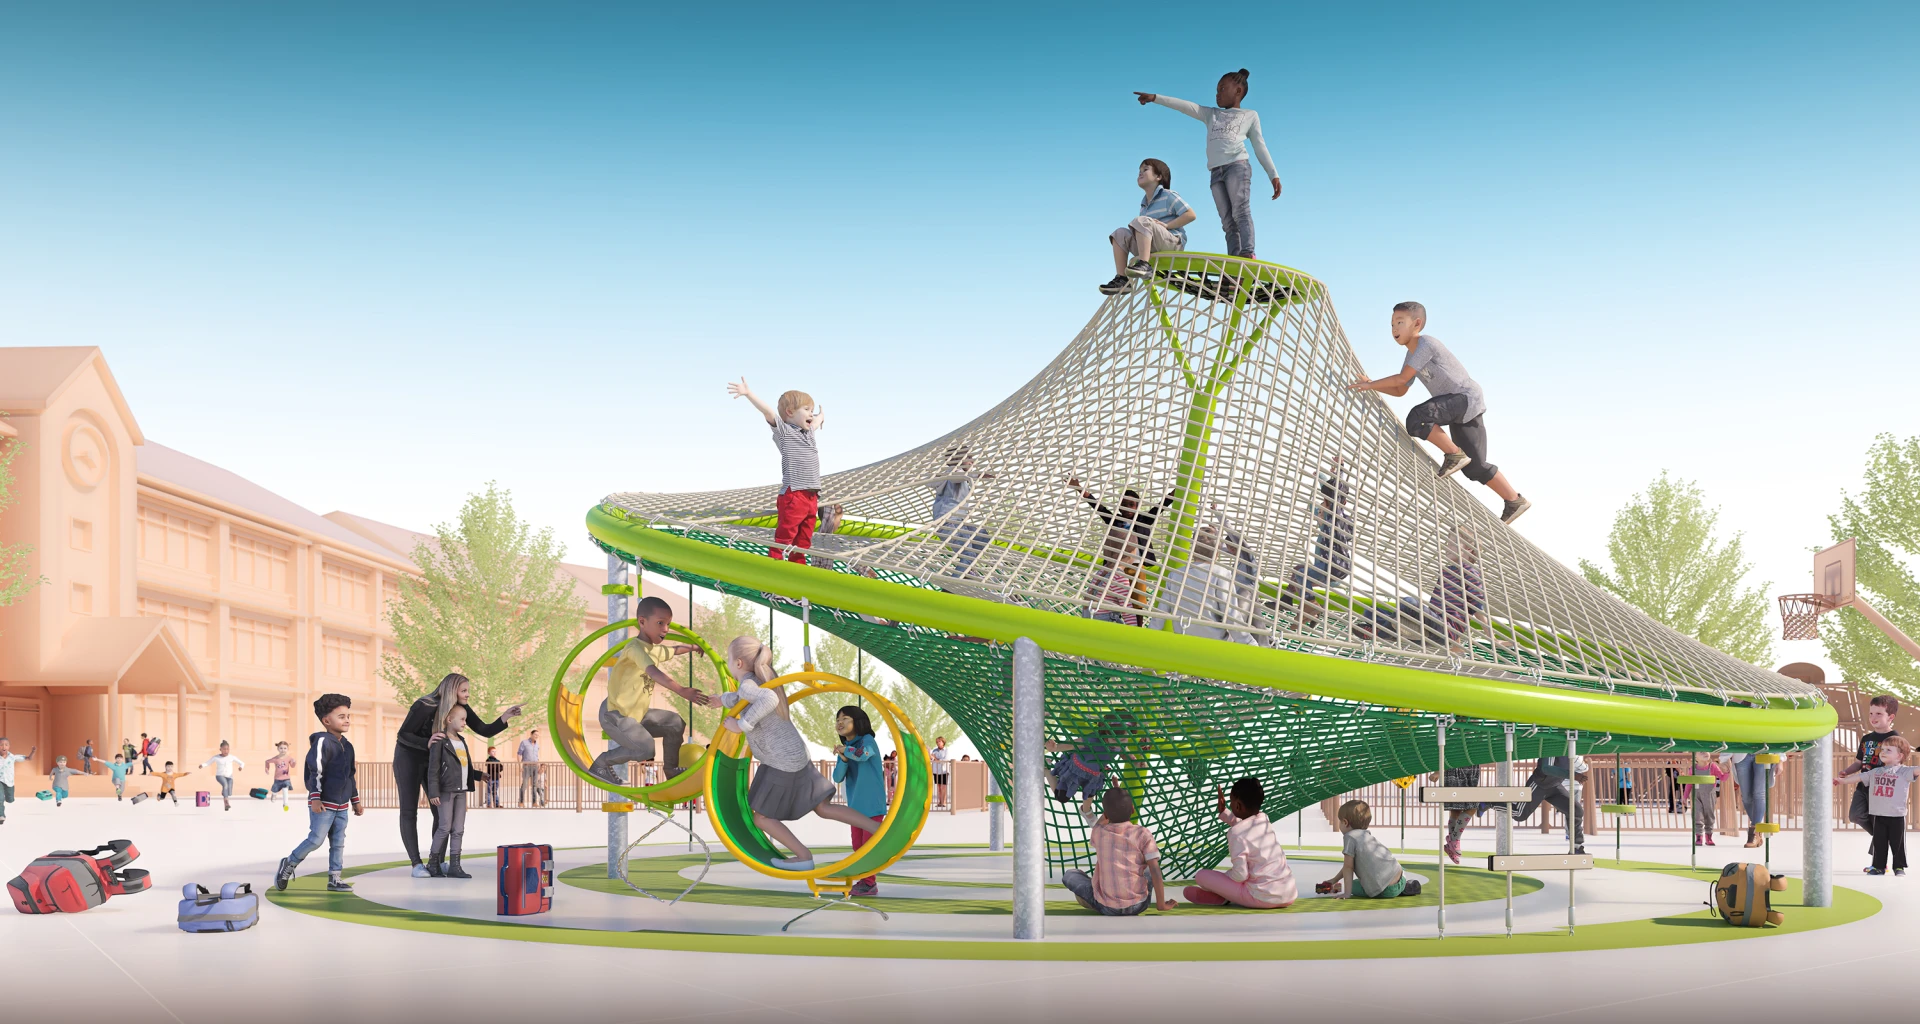 Design concept of a Cumulus Cloud rope playground